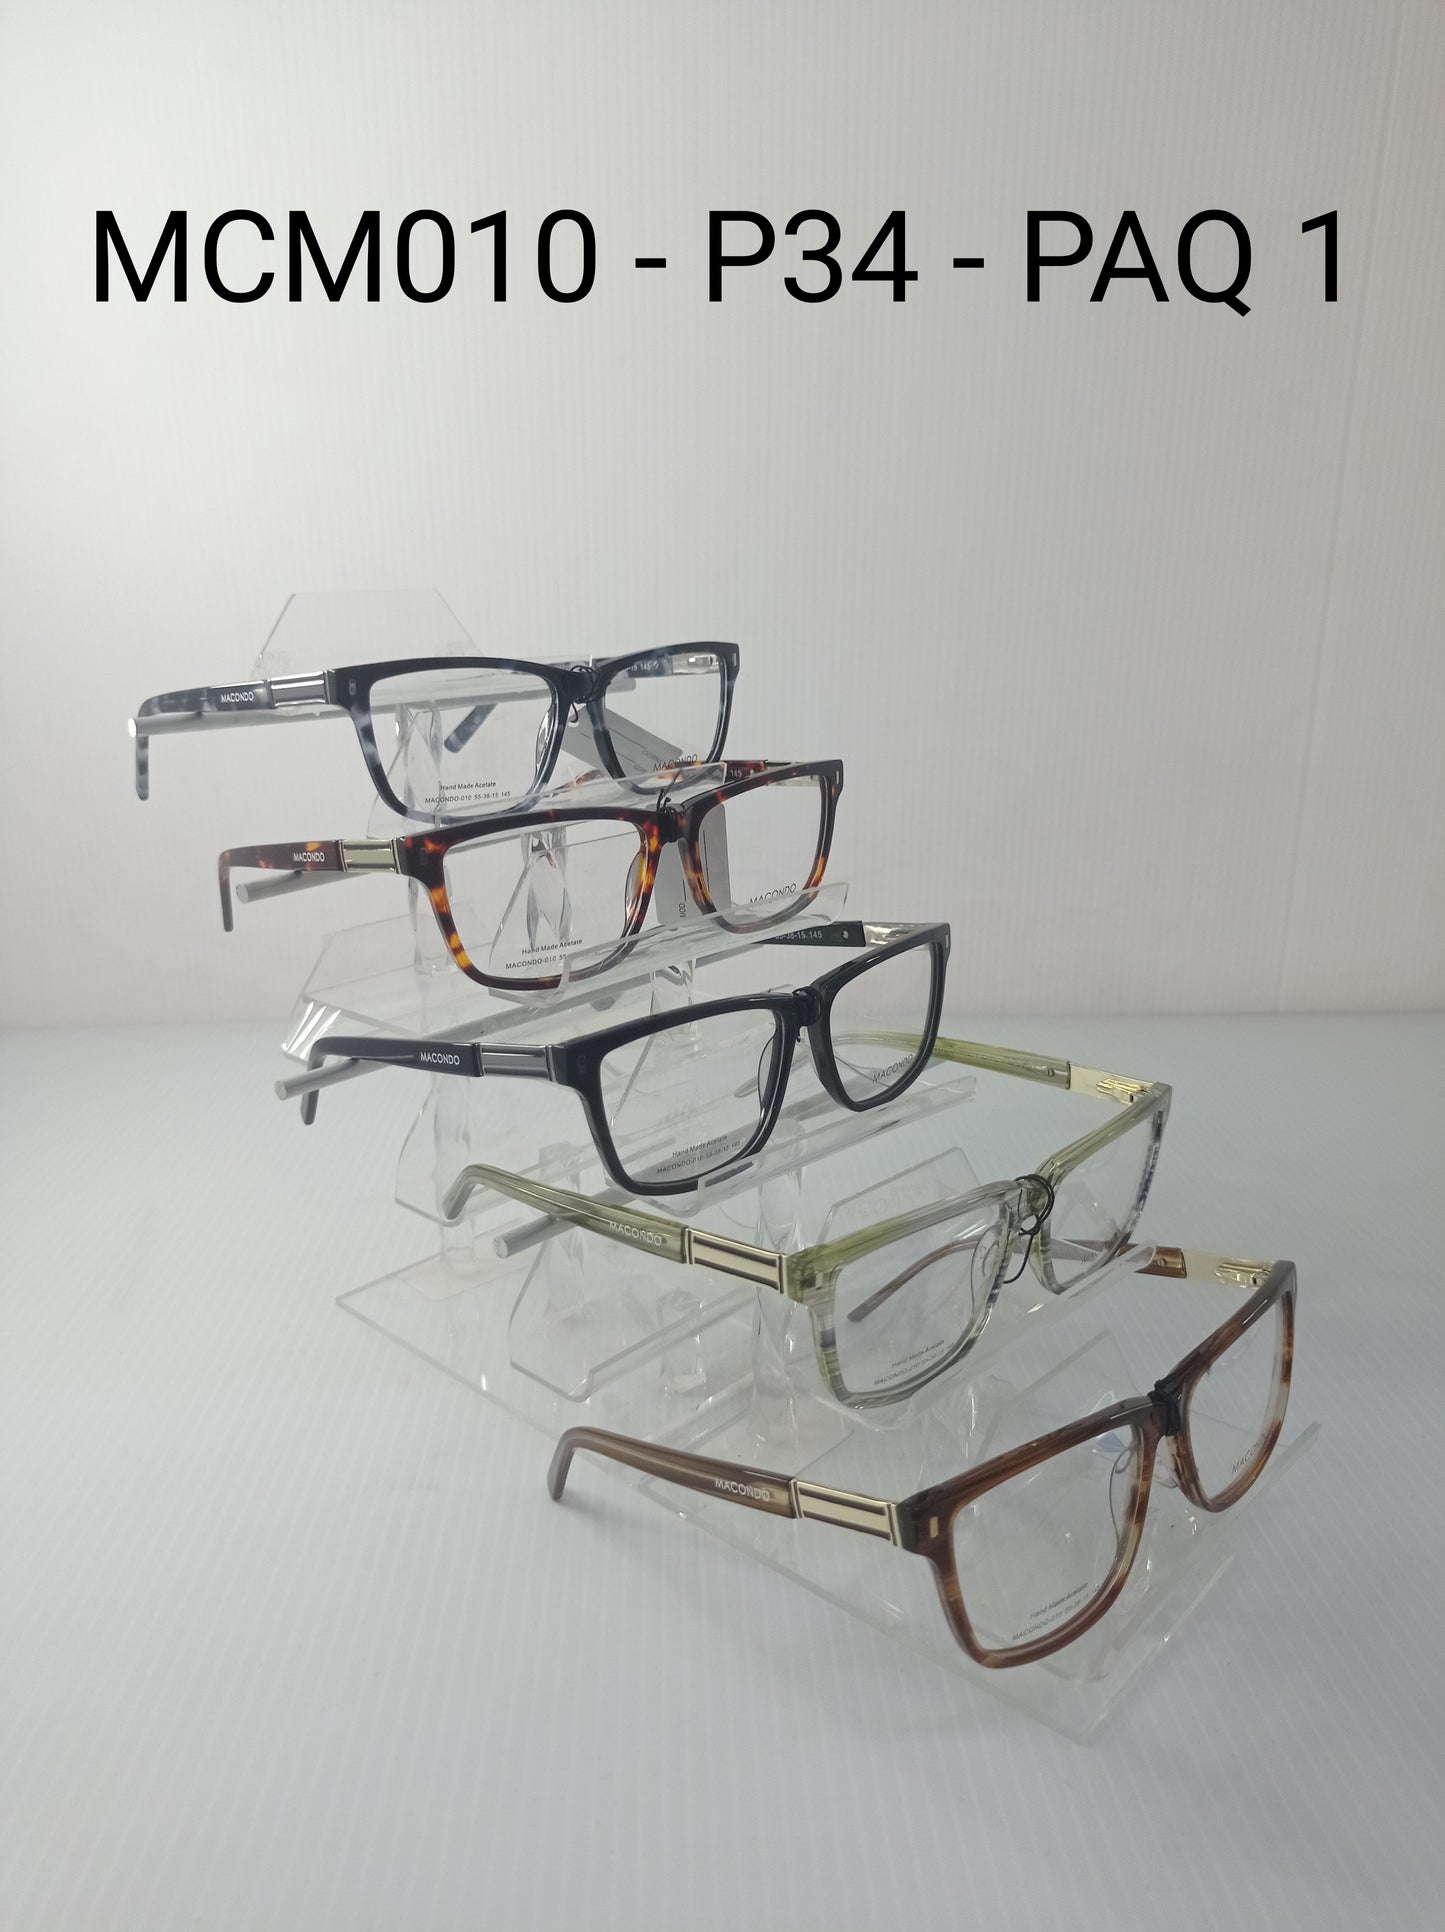 MACONDO - MCM010 - P34